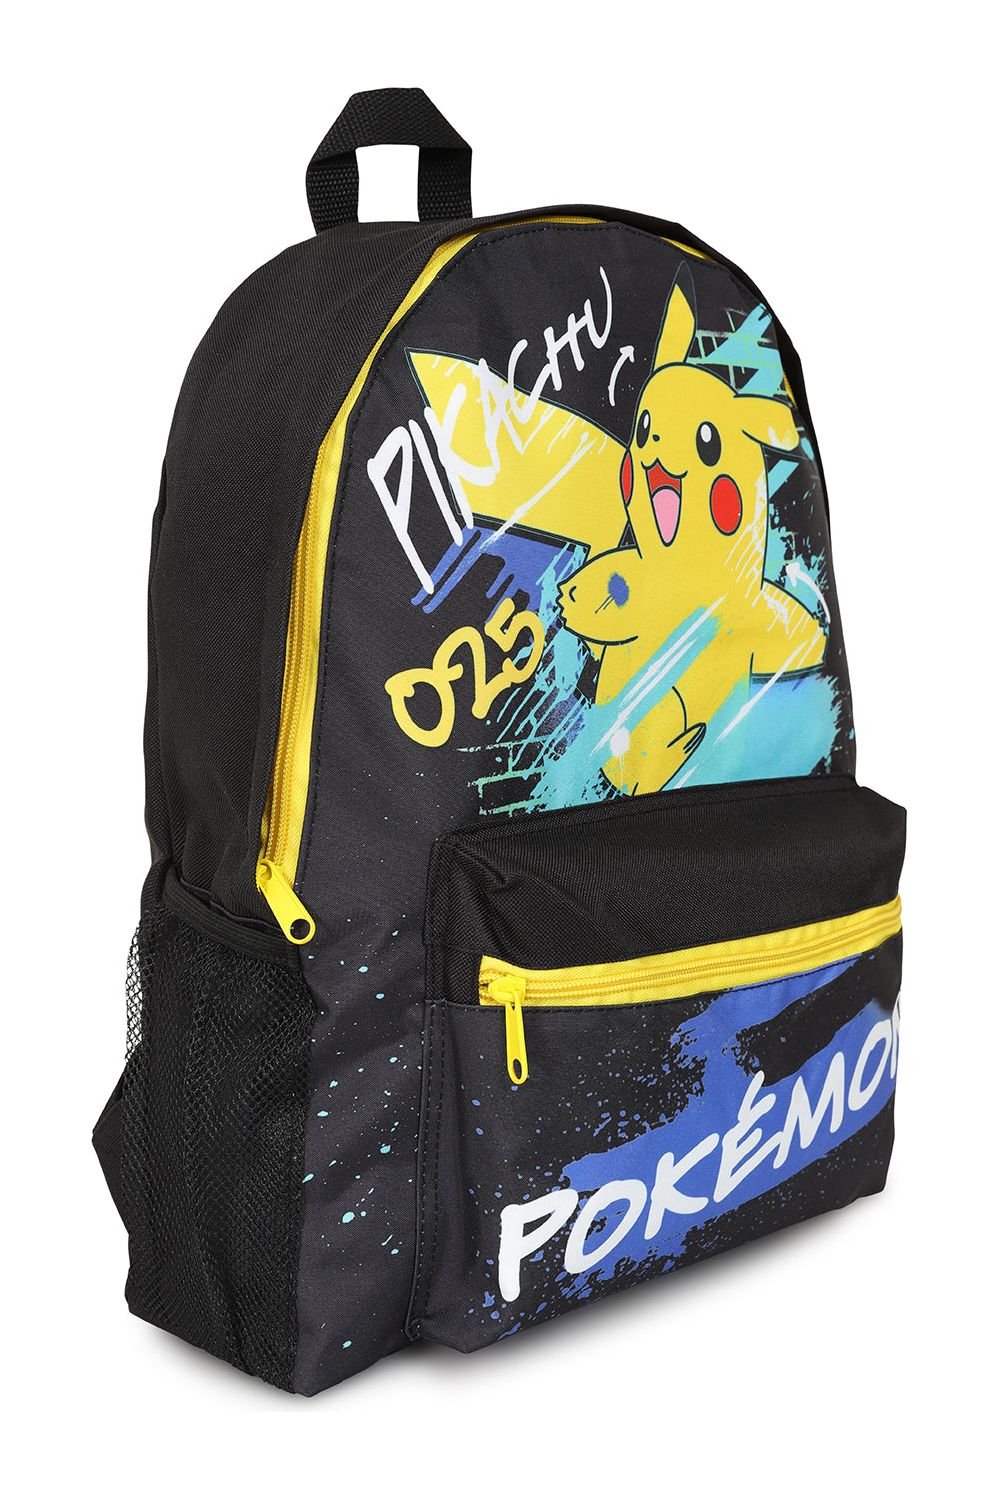 Official Pokemon Pikachu Black and Yellow Kids Backpack Rucksack School Bag